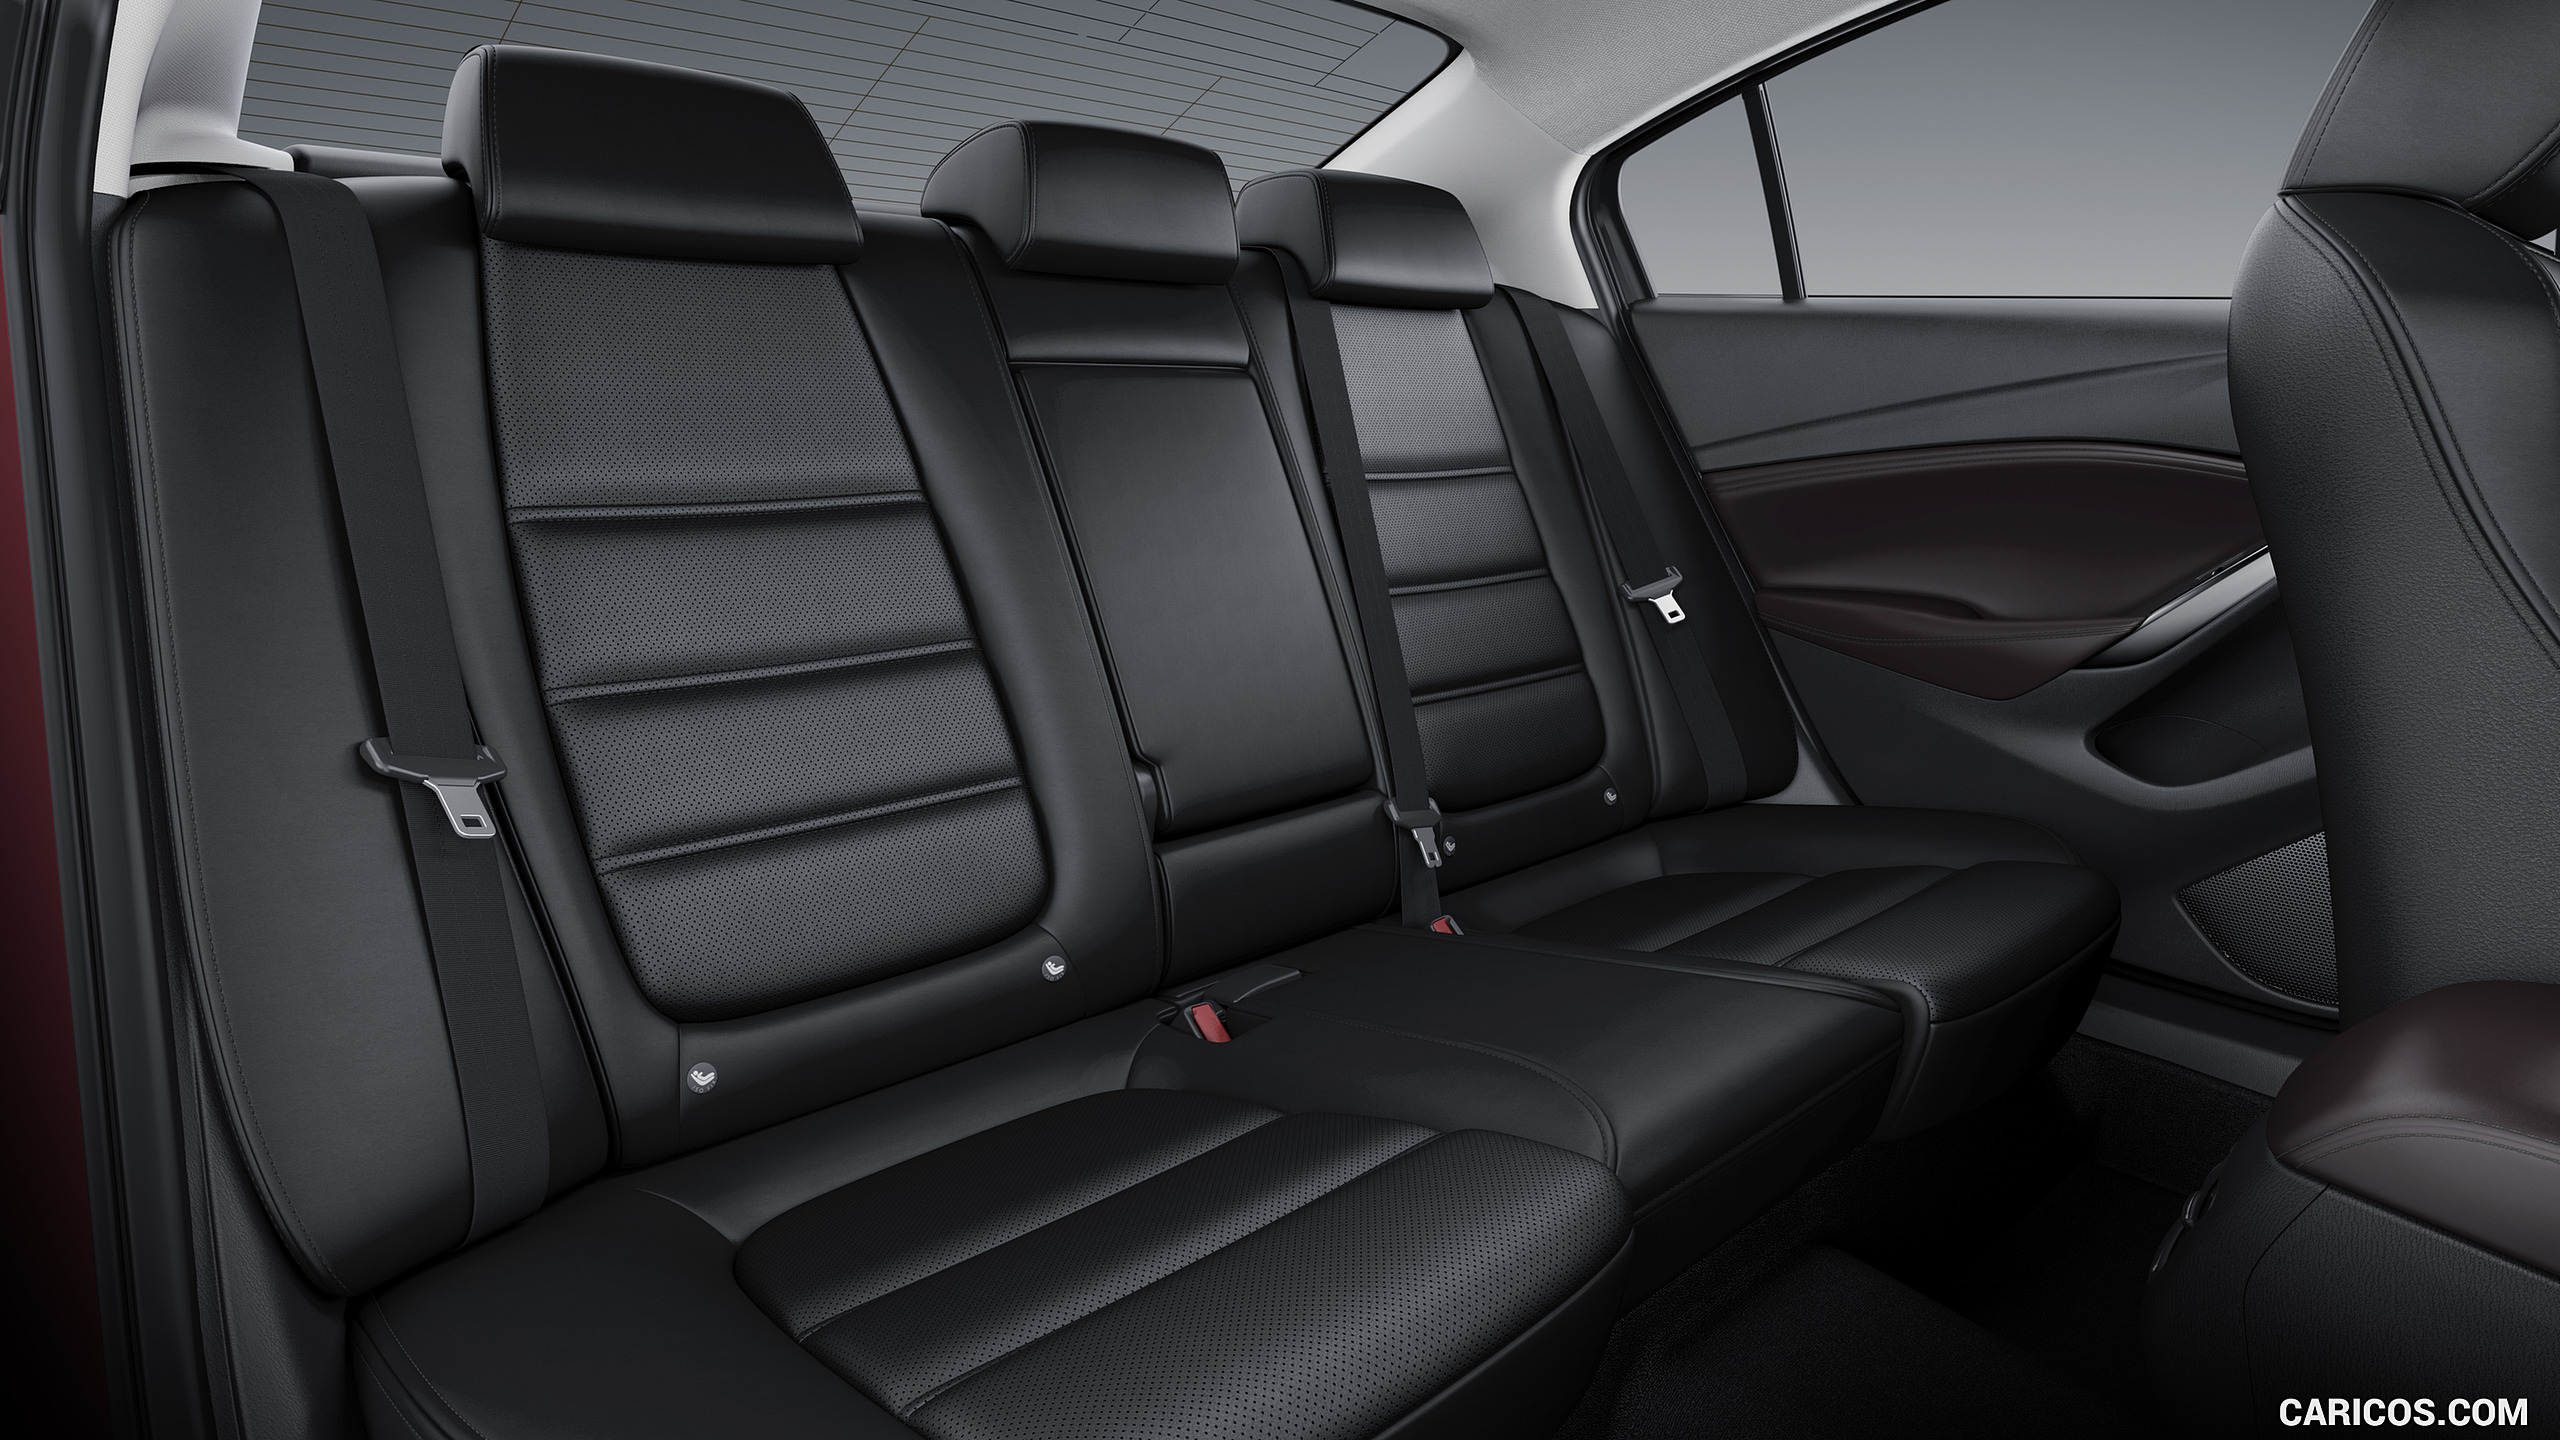 2017 Mazda 6 - Interior, Rear Seats, #15 of 82